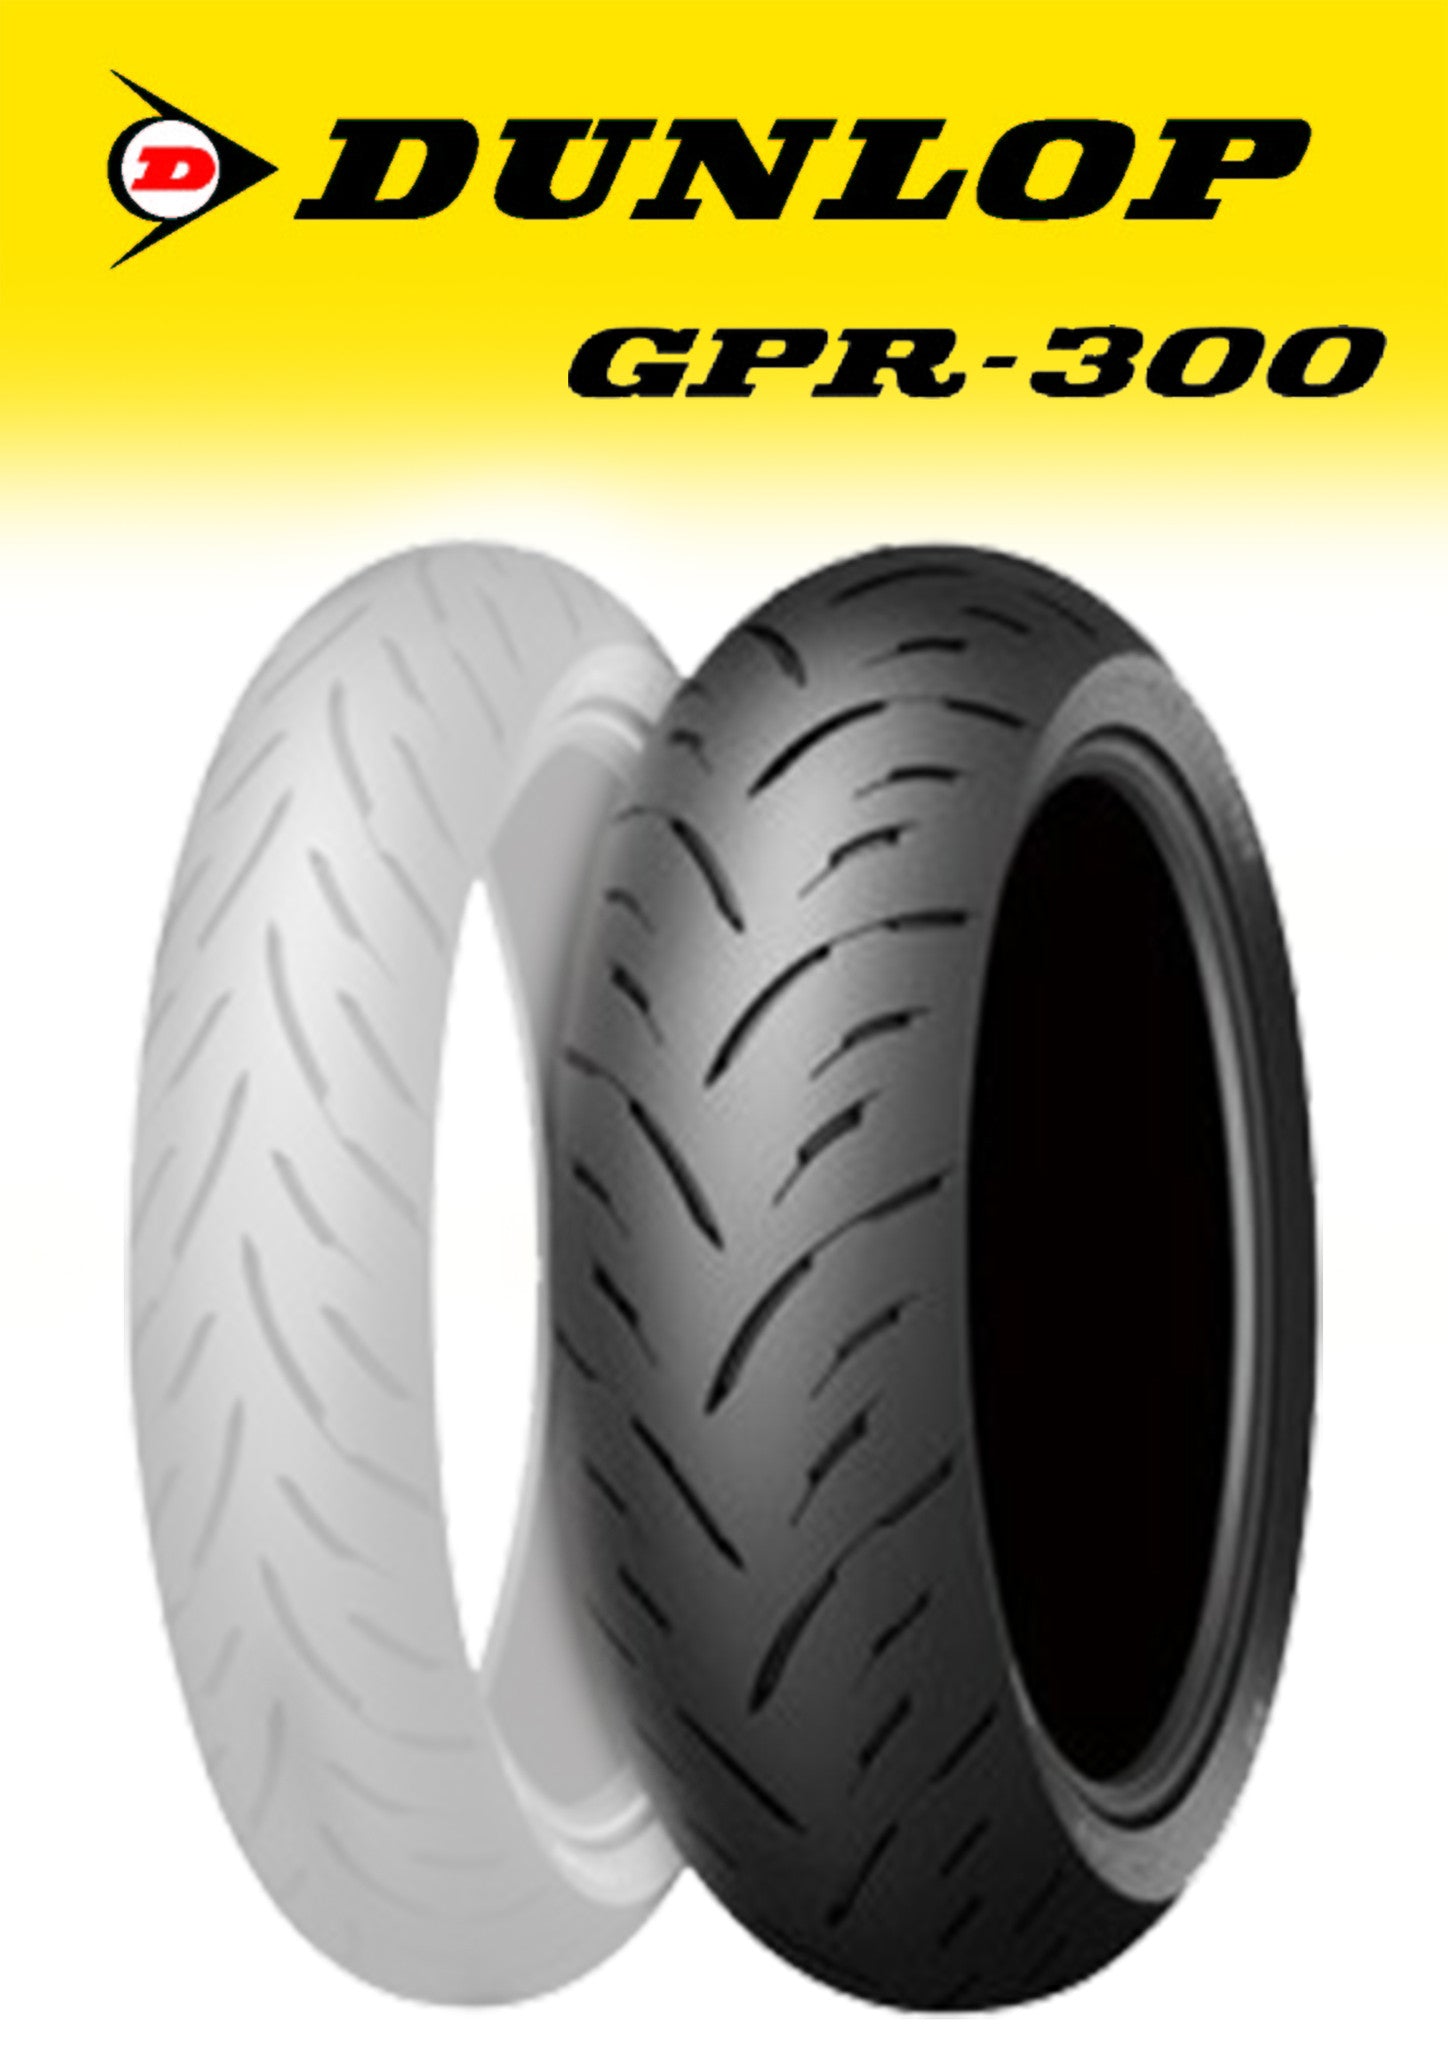 Dunlop Gpr 300 160 60 17 Just Bike Tyre